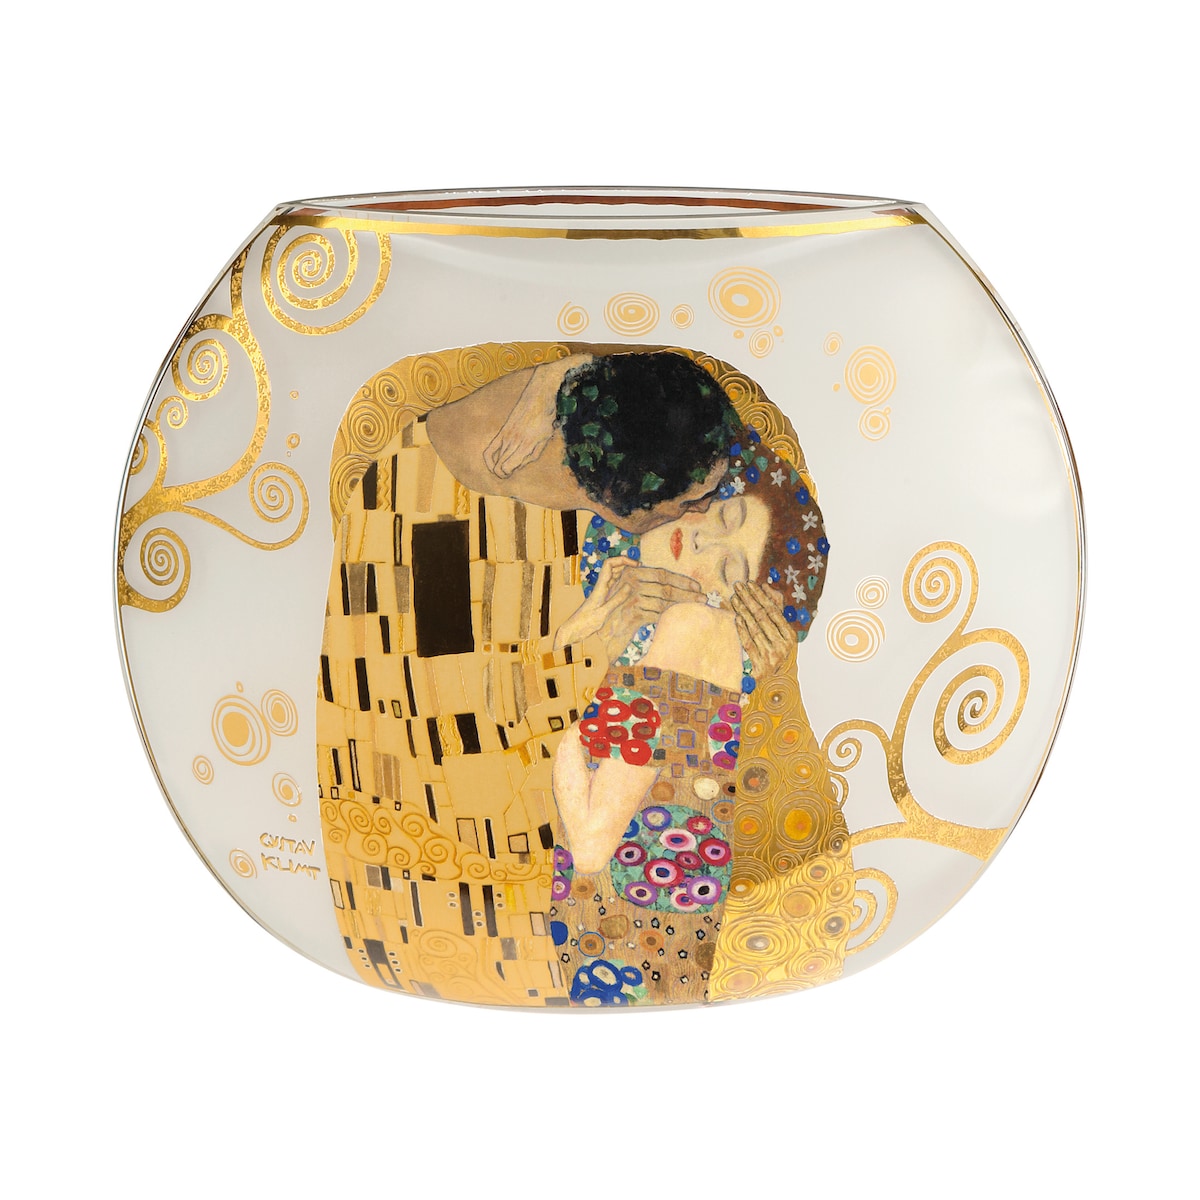 Wazon 22 cm G.Klimt - Pocałunek - Goebel